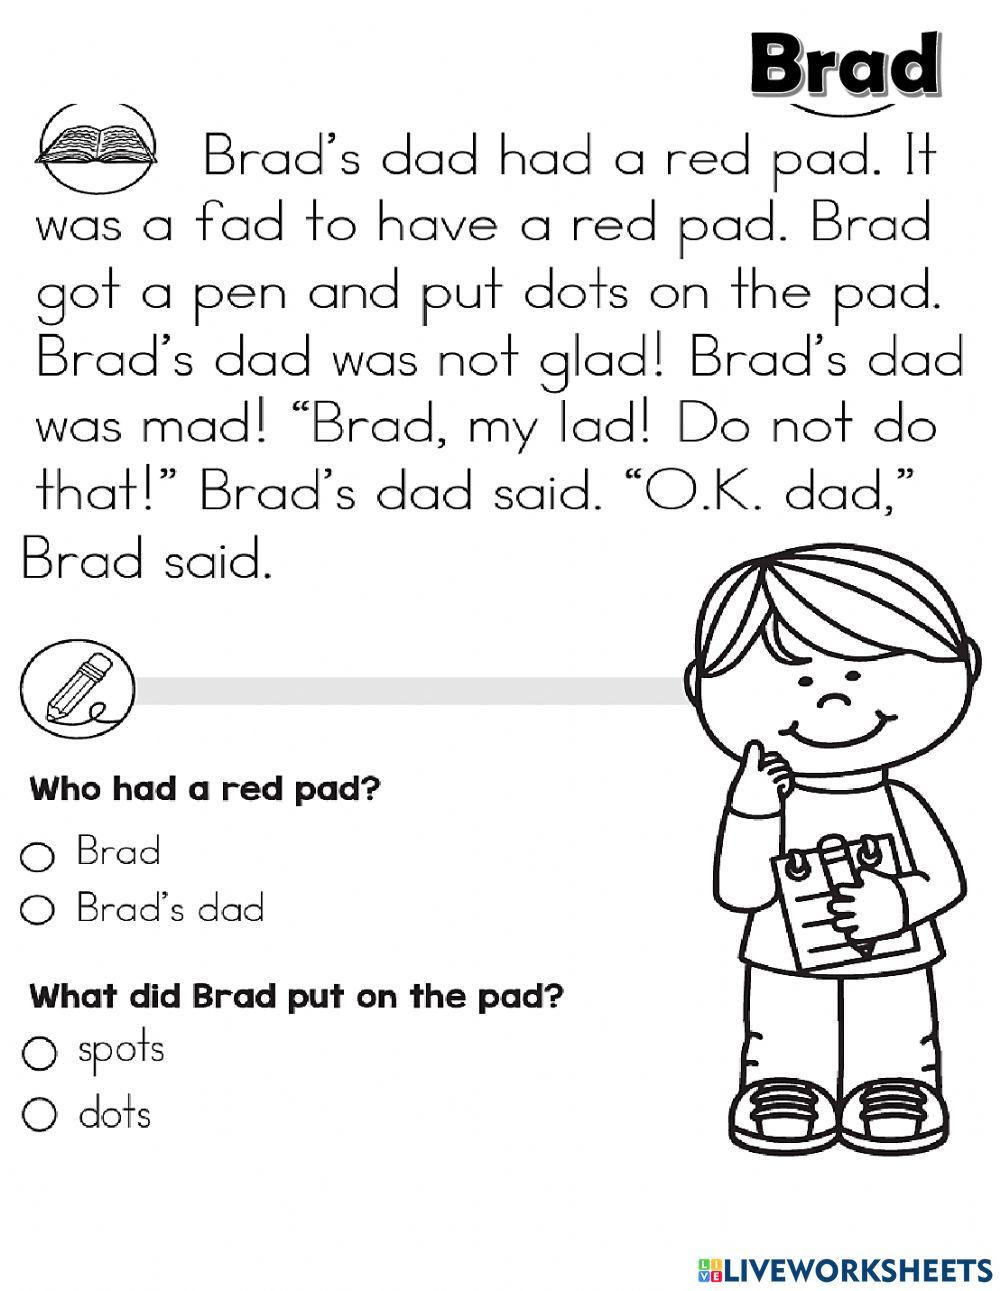 Brad's dad